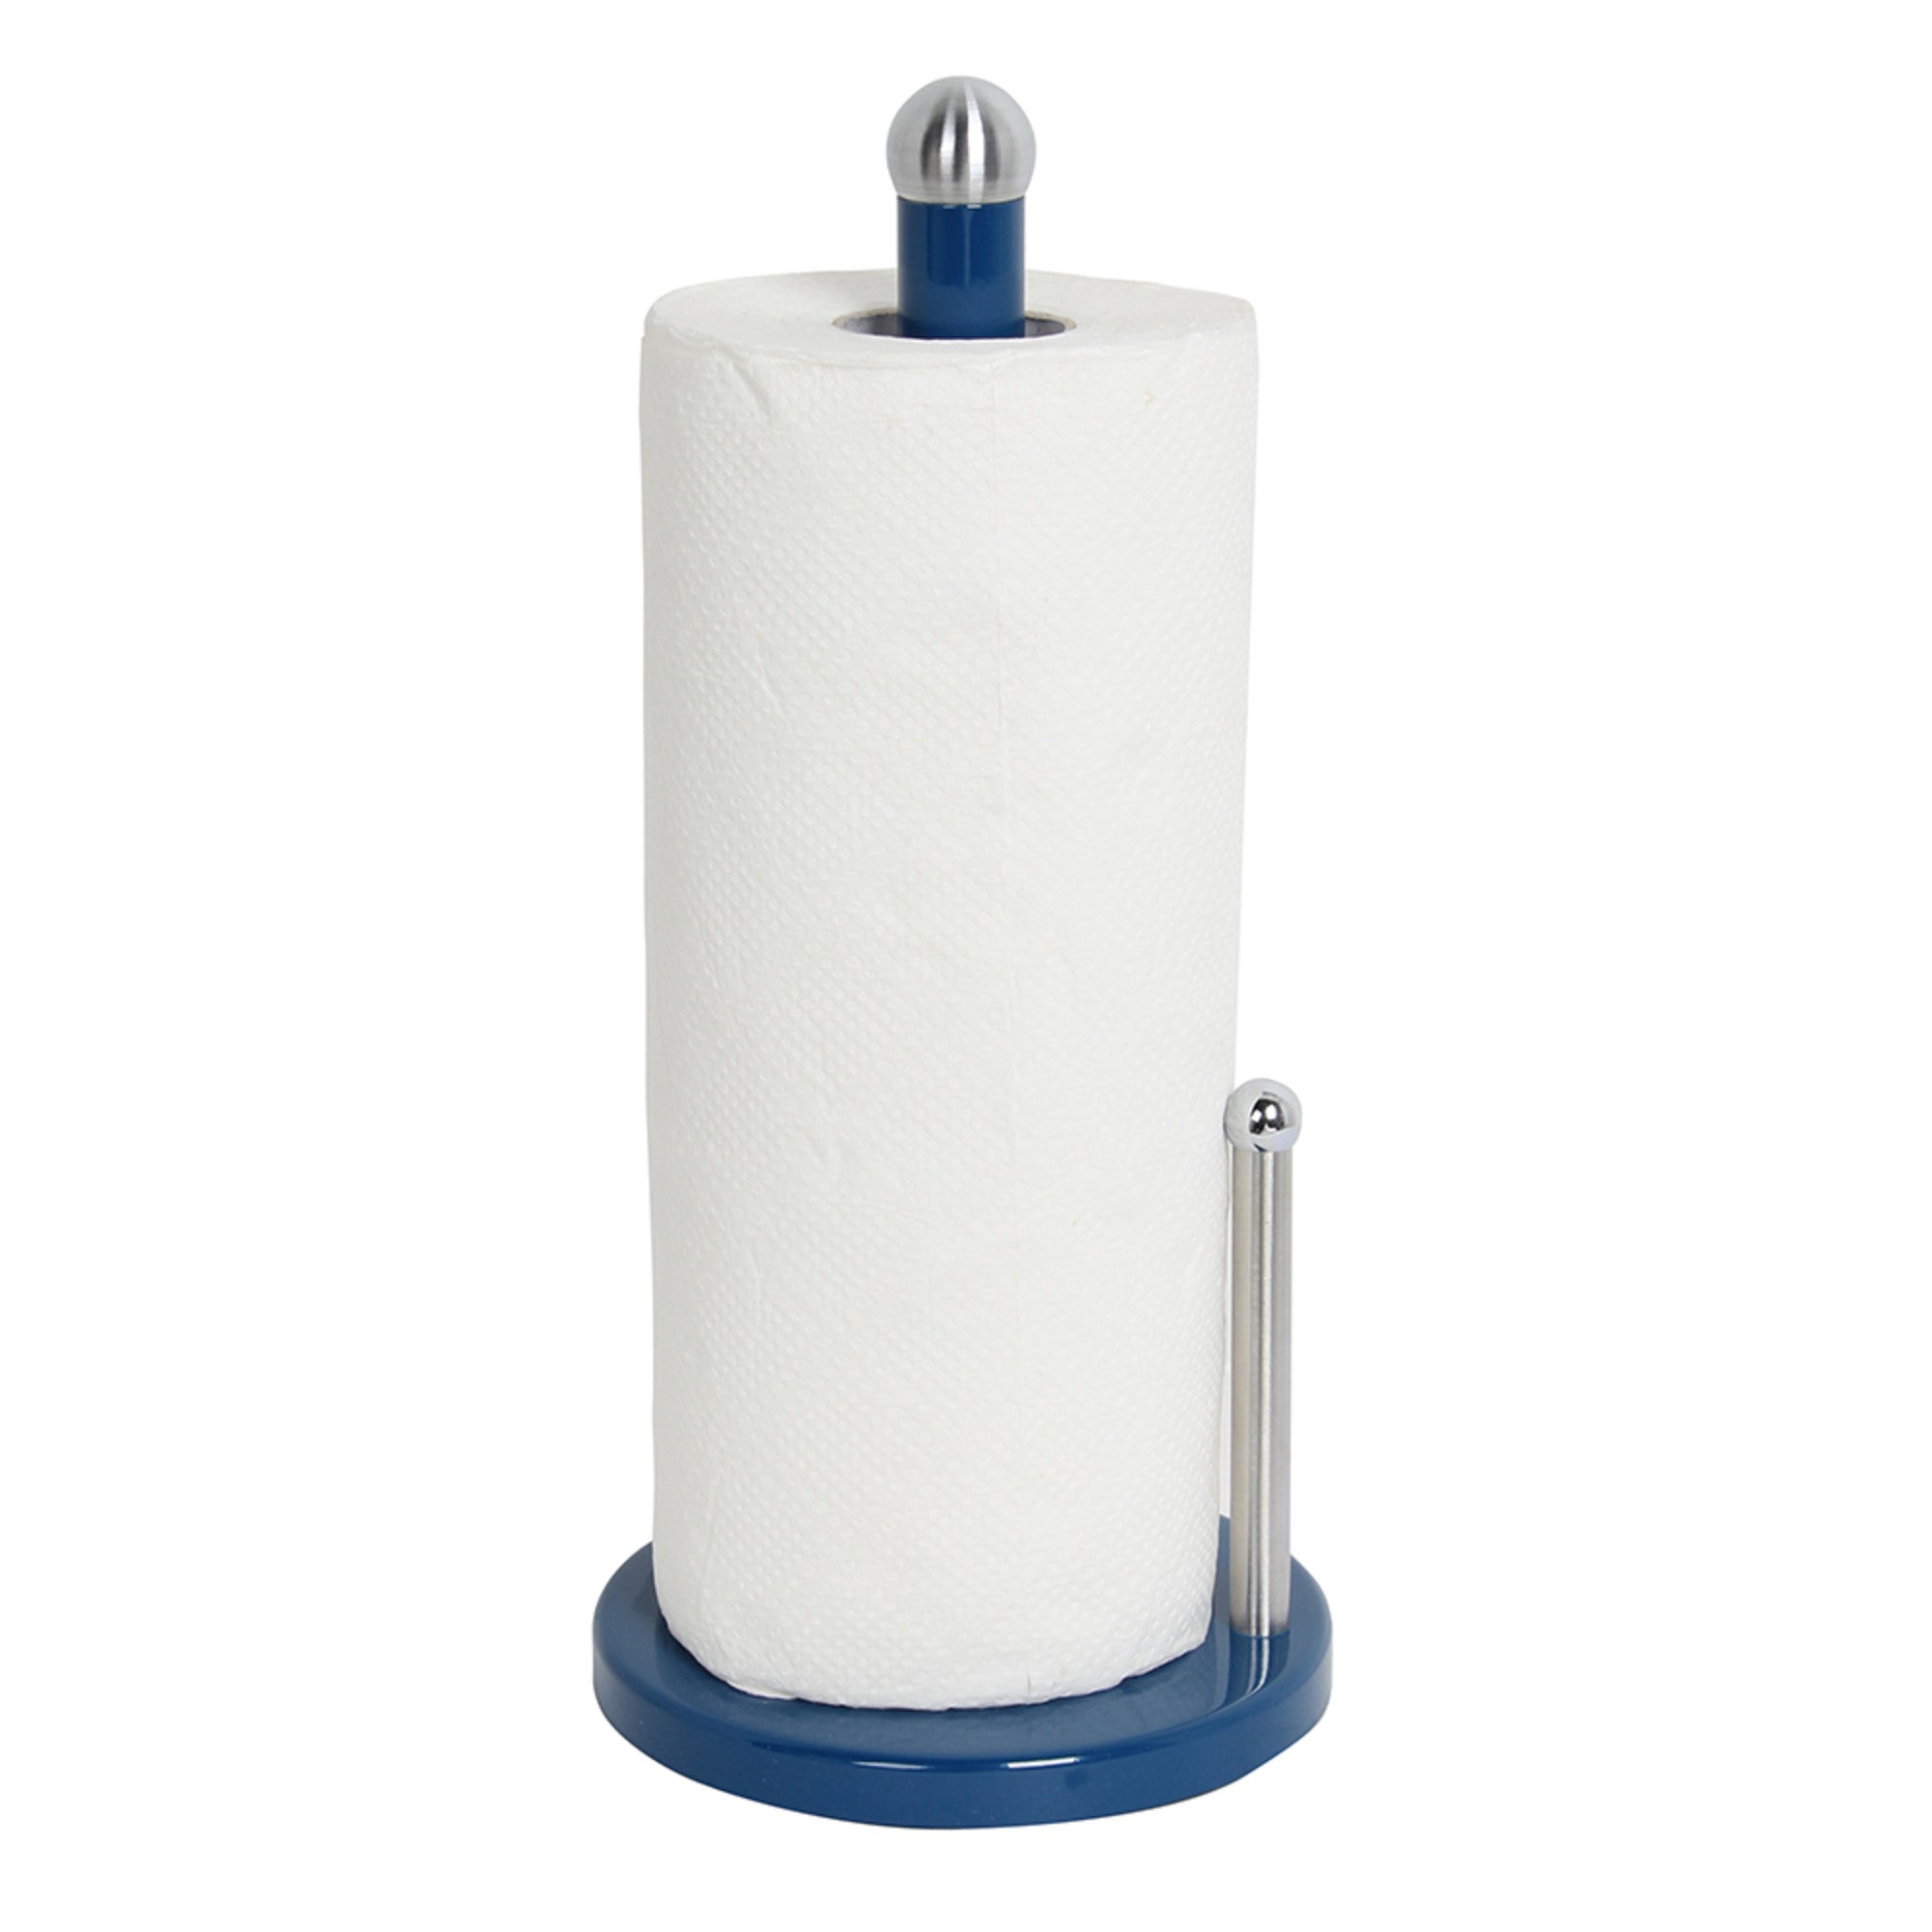 Home Basics Powder Coated Steel Paper Towel Holder - Assorted Colors